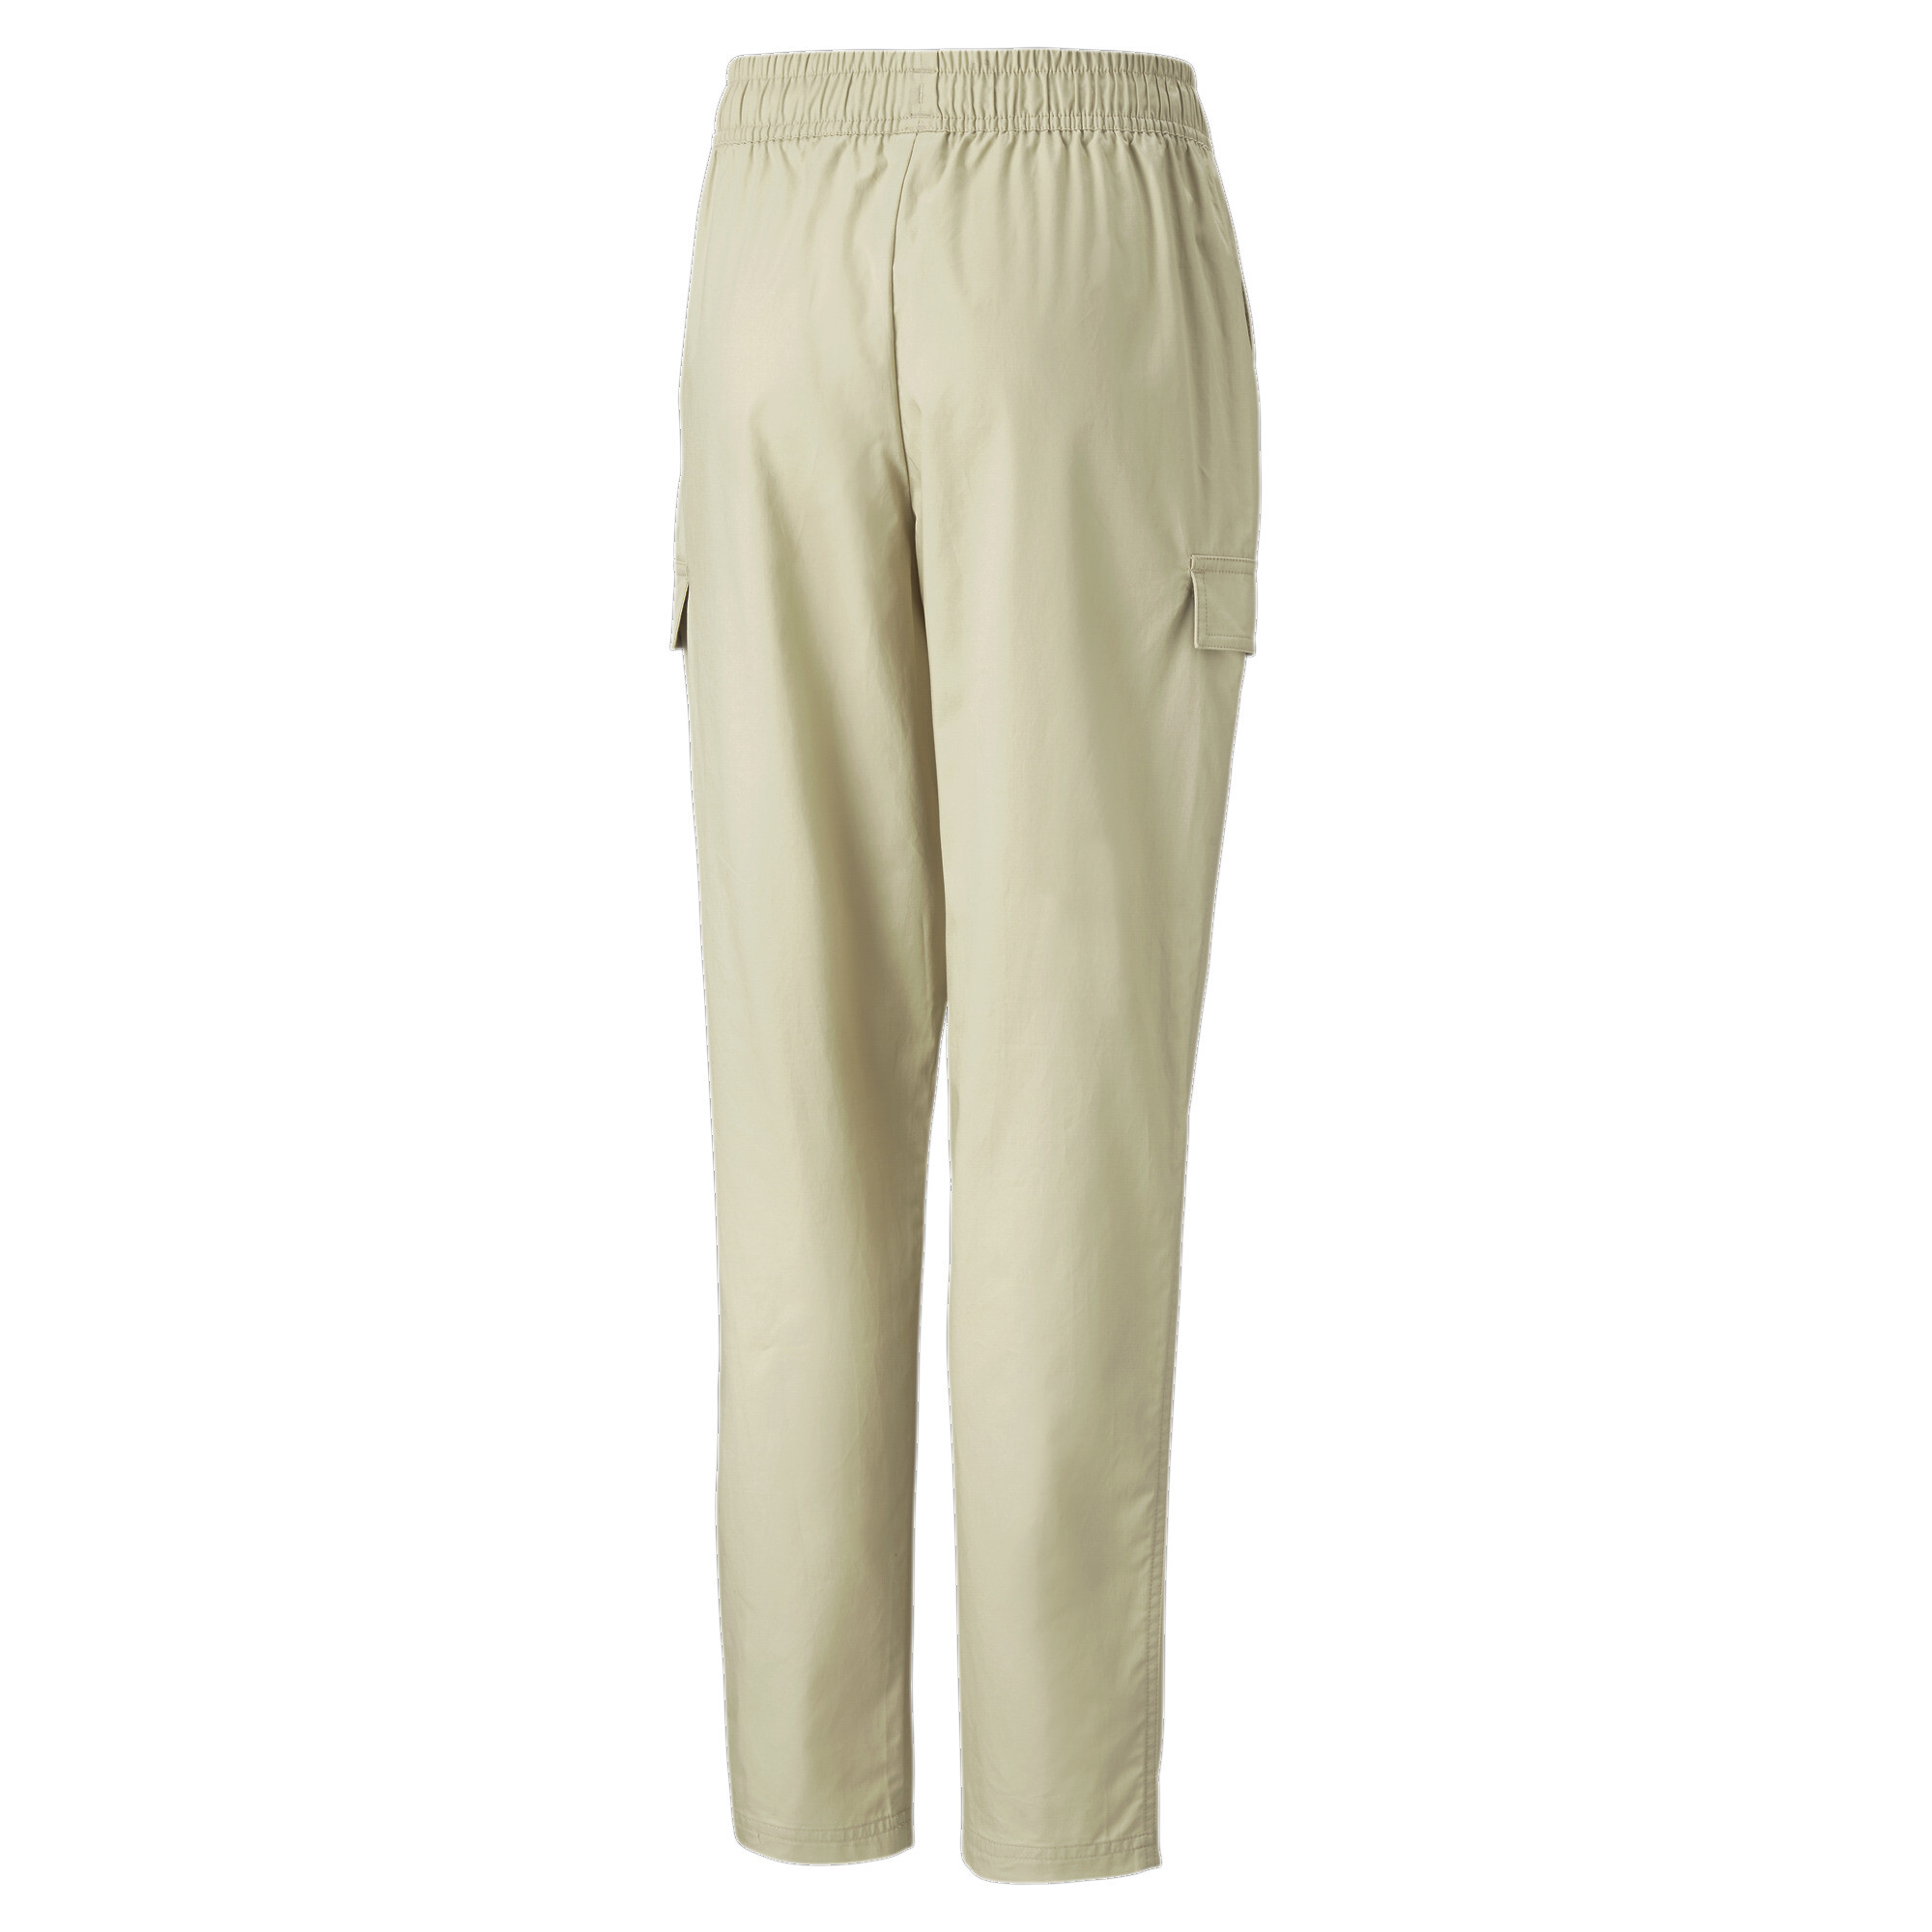 PUMA Classics Woven Sweatpants In Beige, Size 9-10 Youth